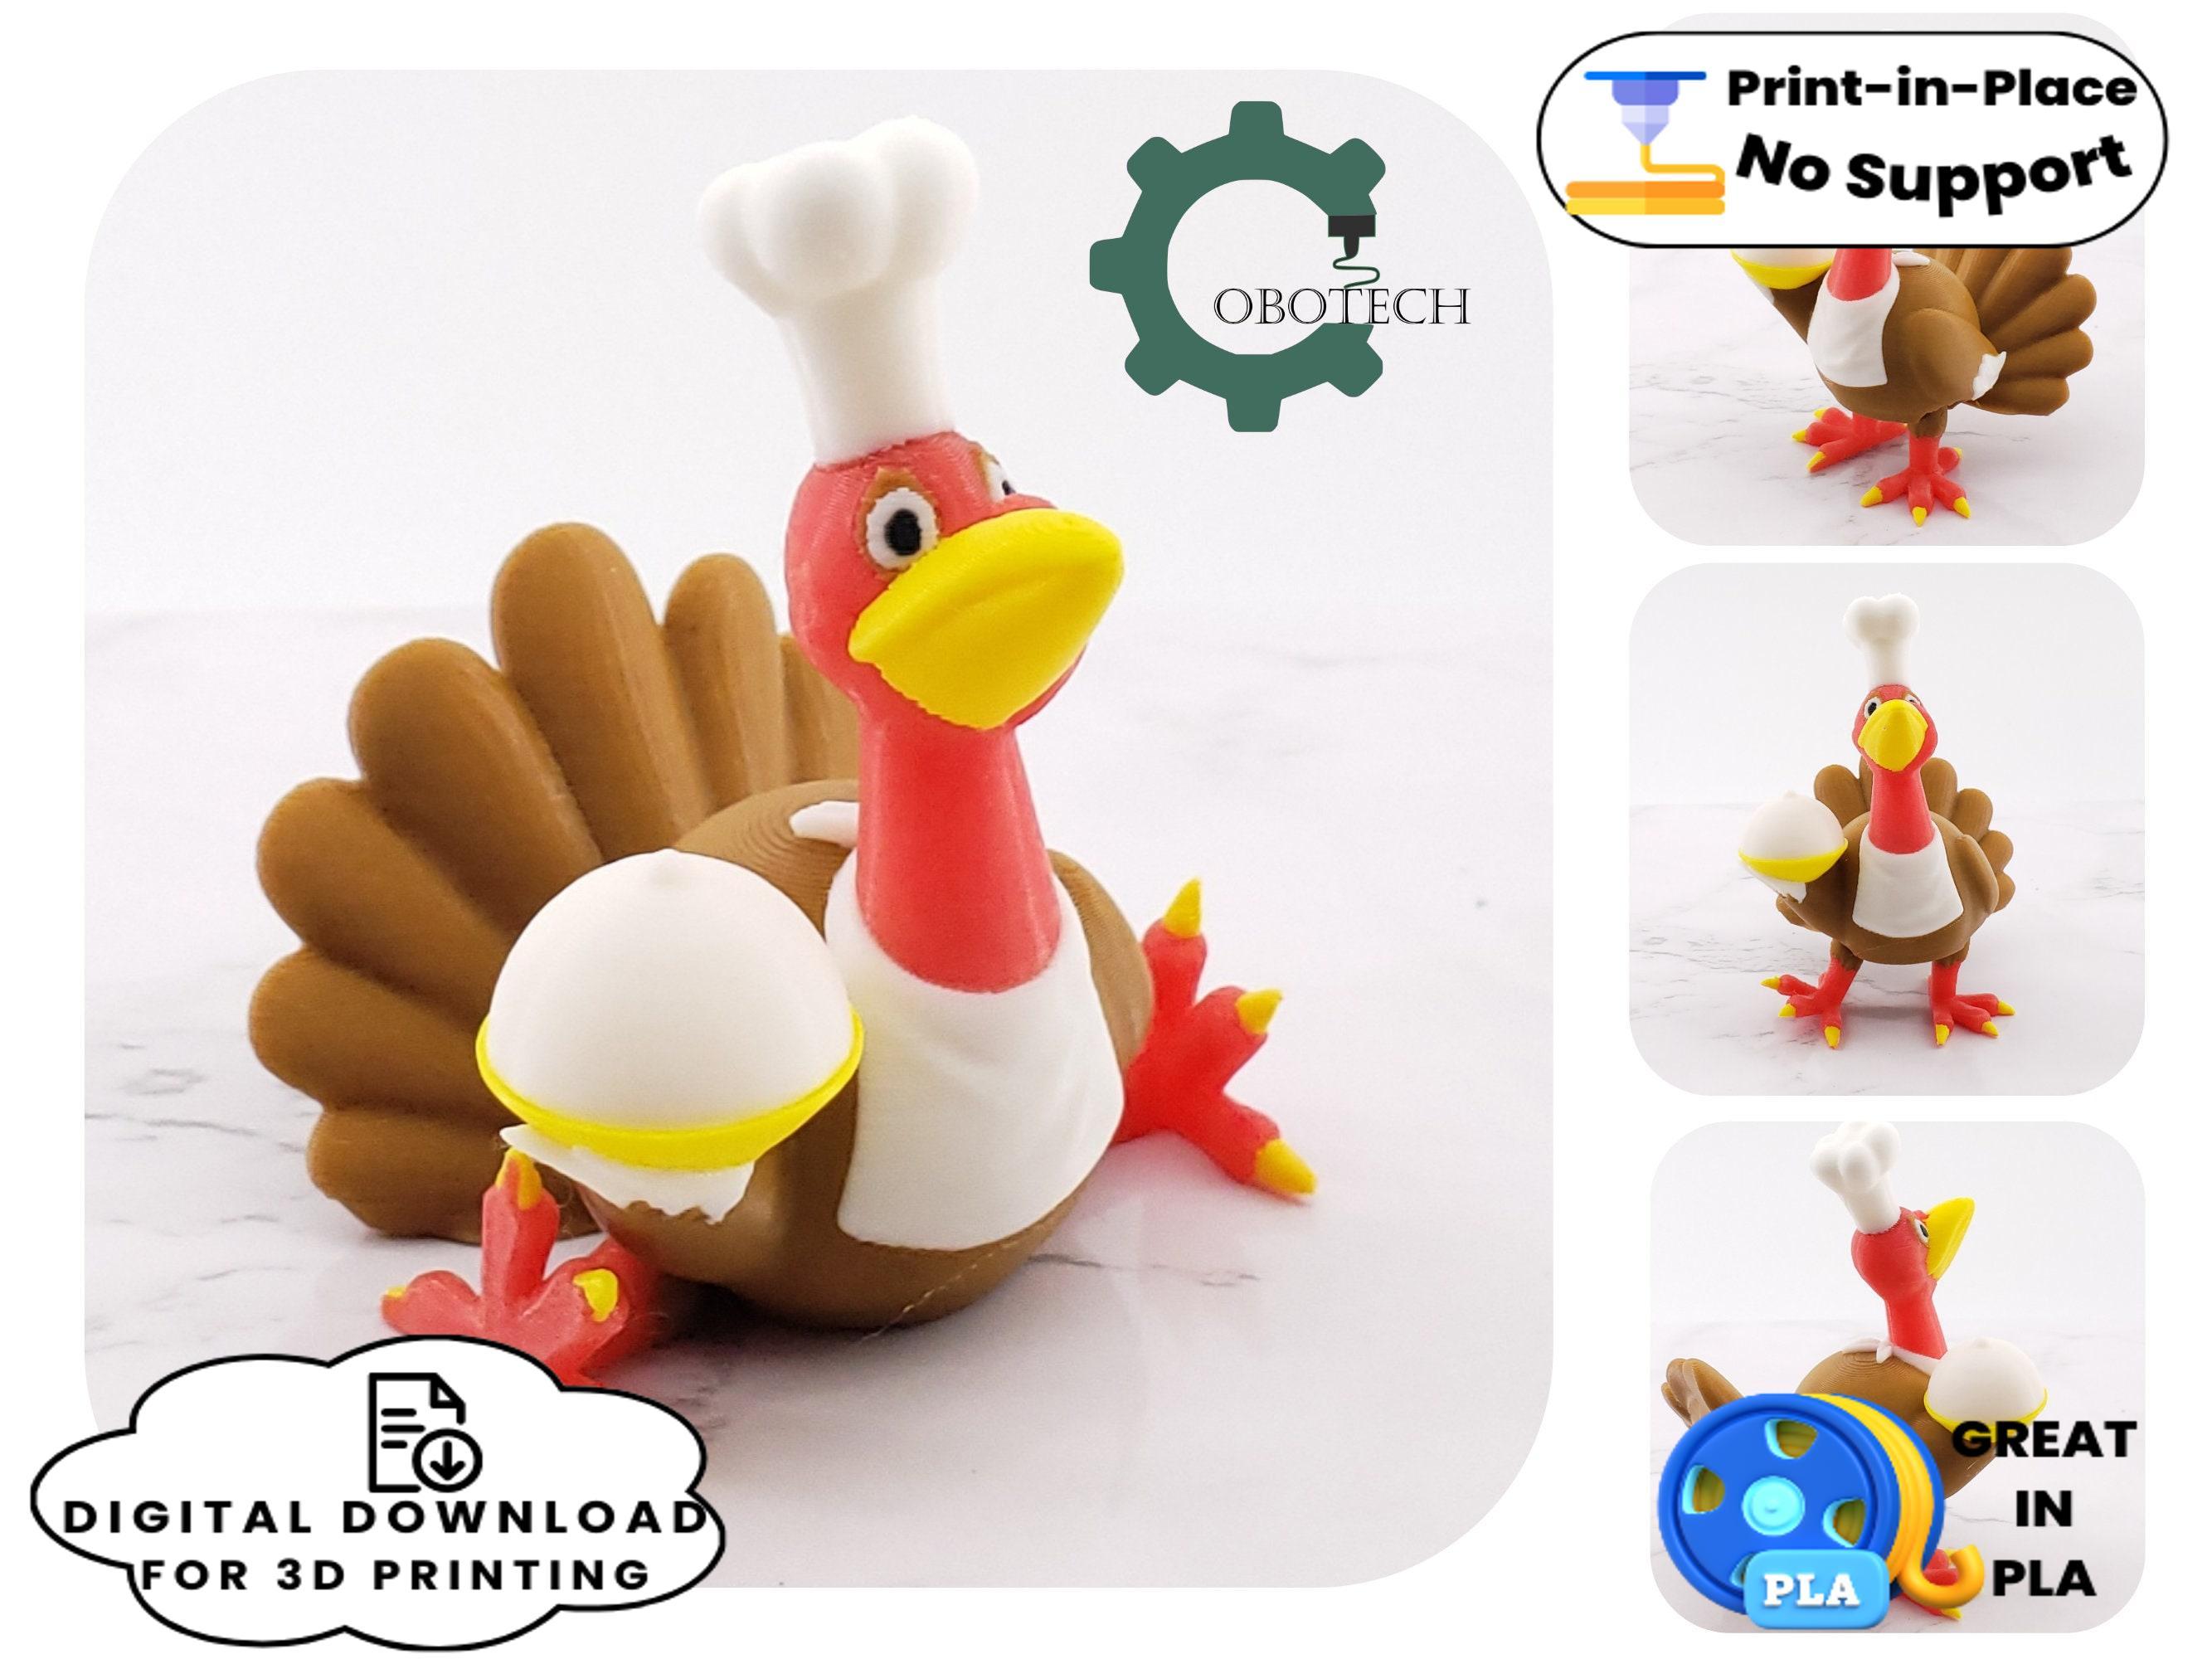 Cobotech Articulated Turkey Chef 3d model